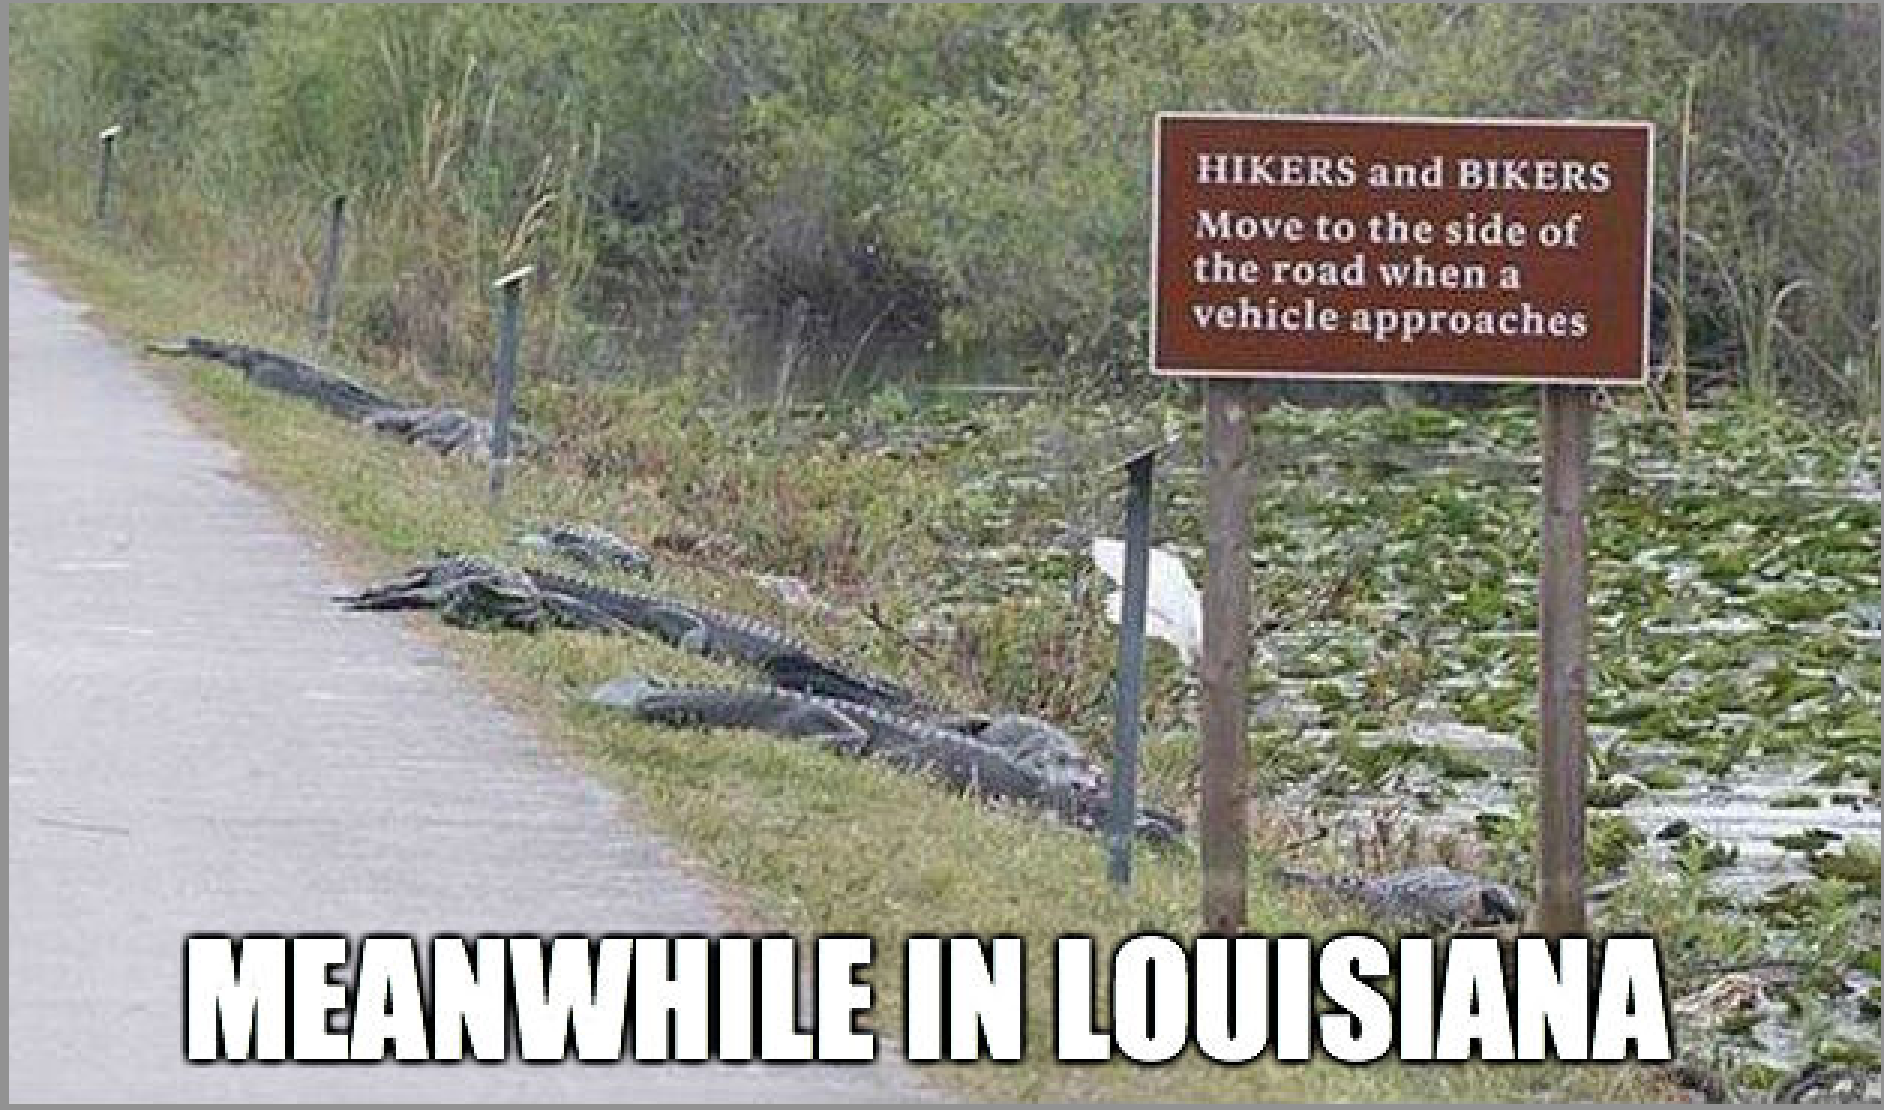 Hilarious Jokes About Louisiana